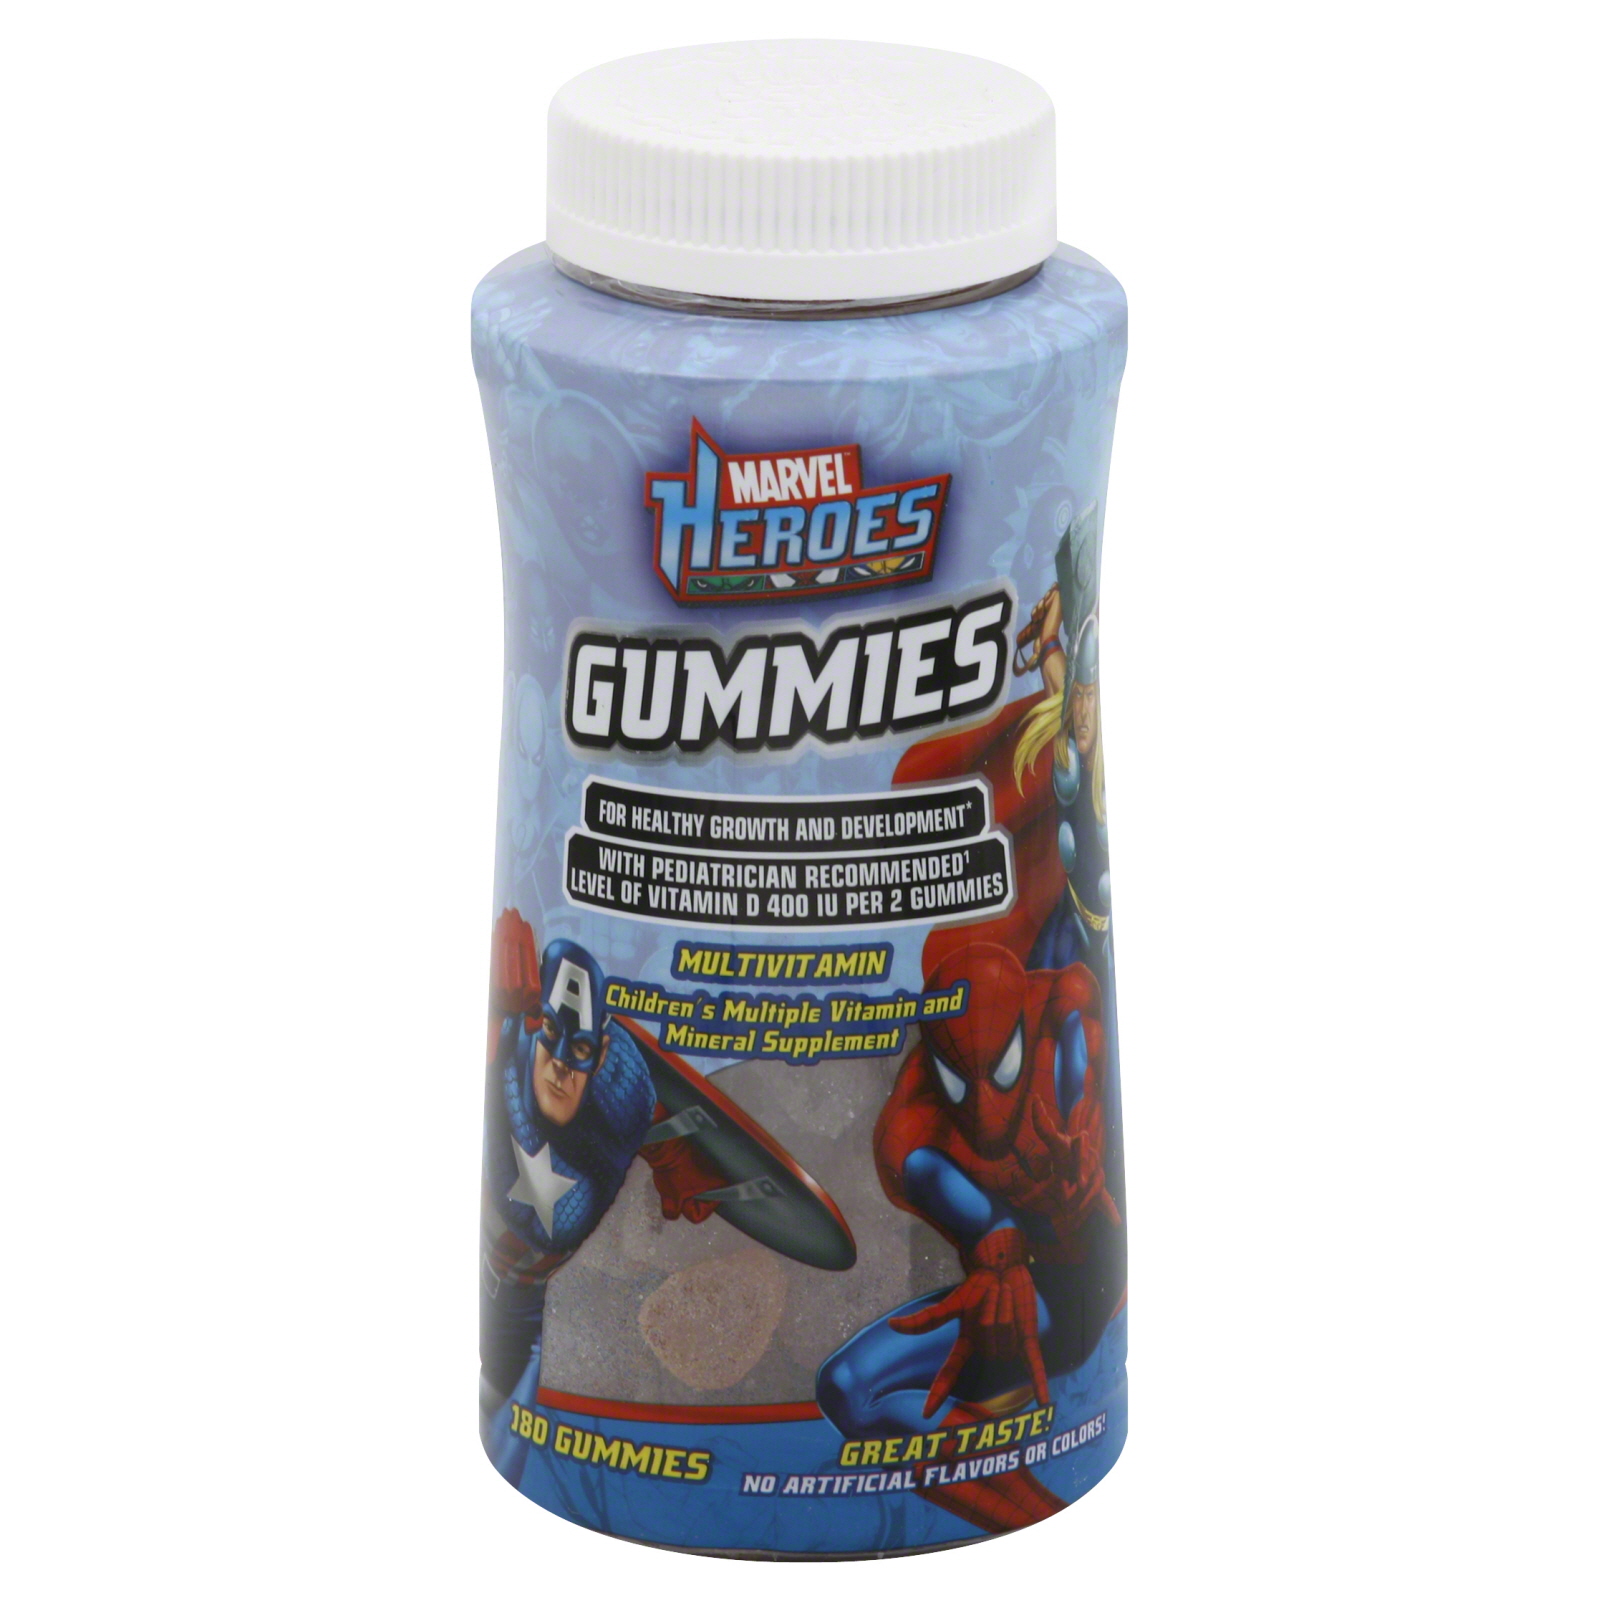 Sundown Gummies Multiple Vitamin & Mineral Supplement, Children's, Marvel Heroes Super Heroes, Gummy, 180 gummies